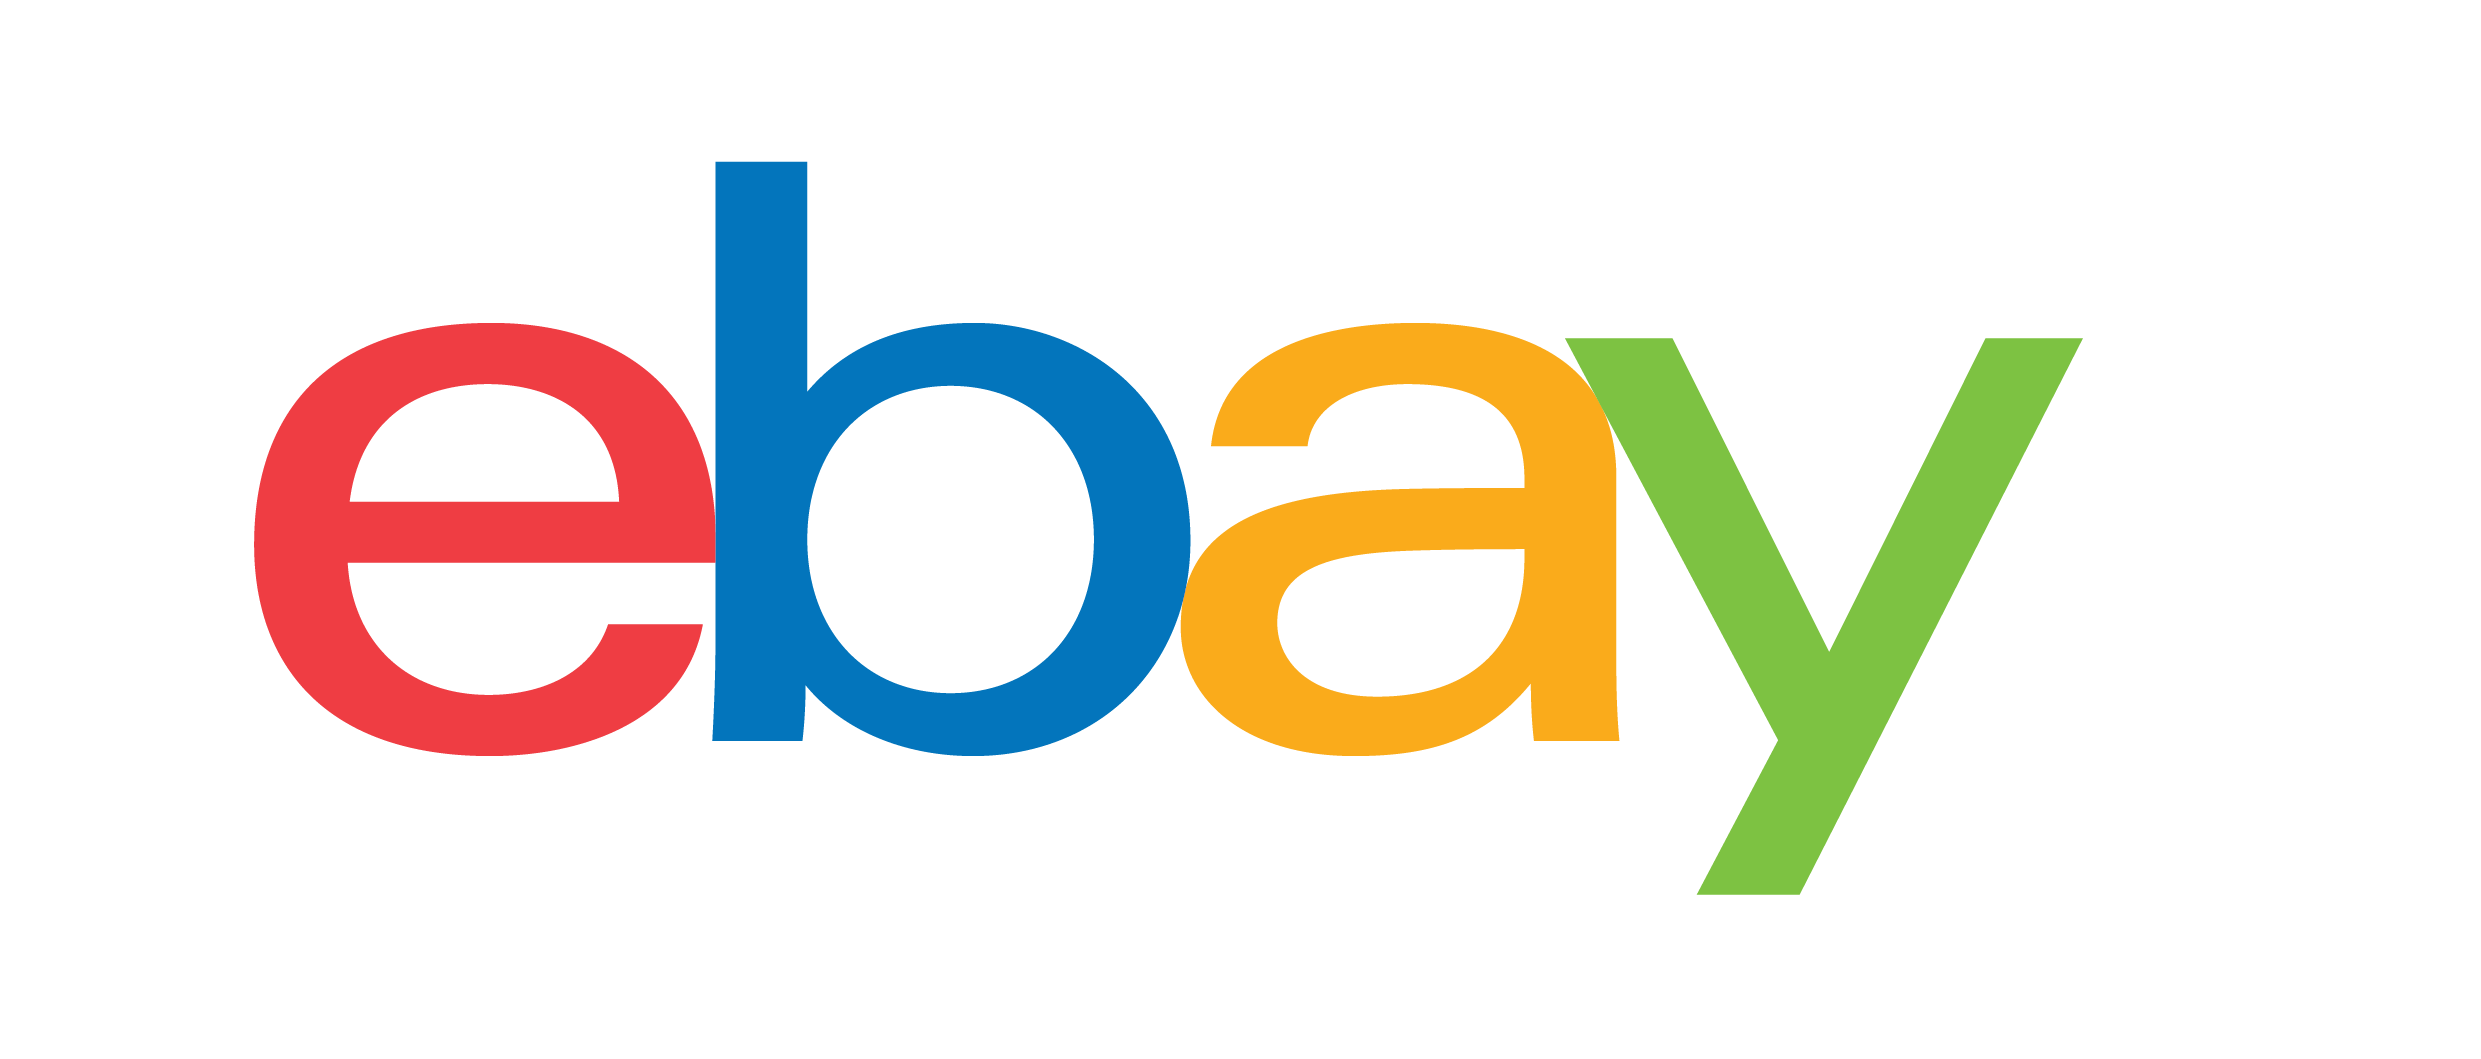 eBay のロゴ